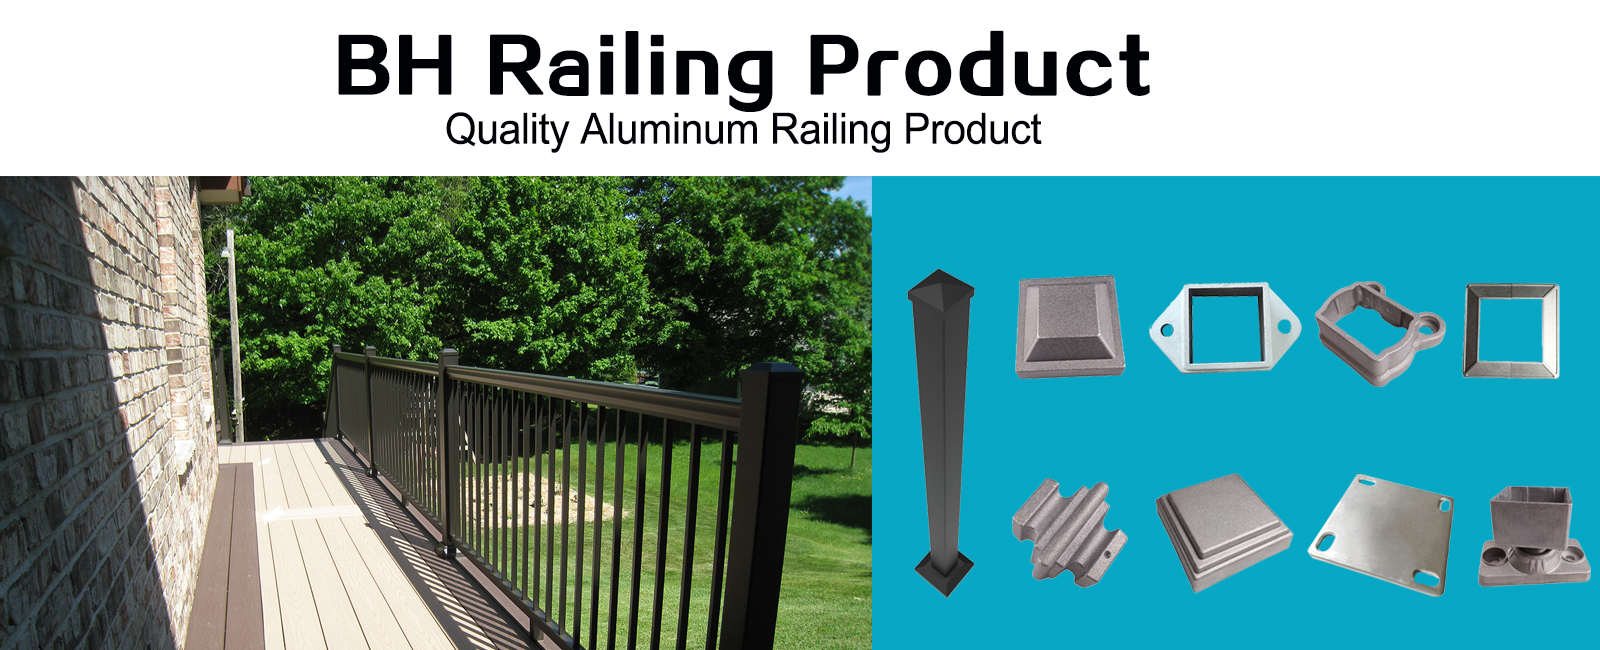 Quality Aluminum BH Railing Product